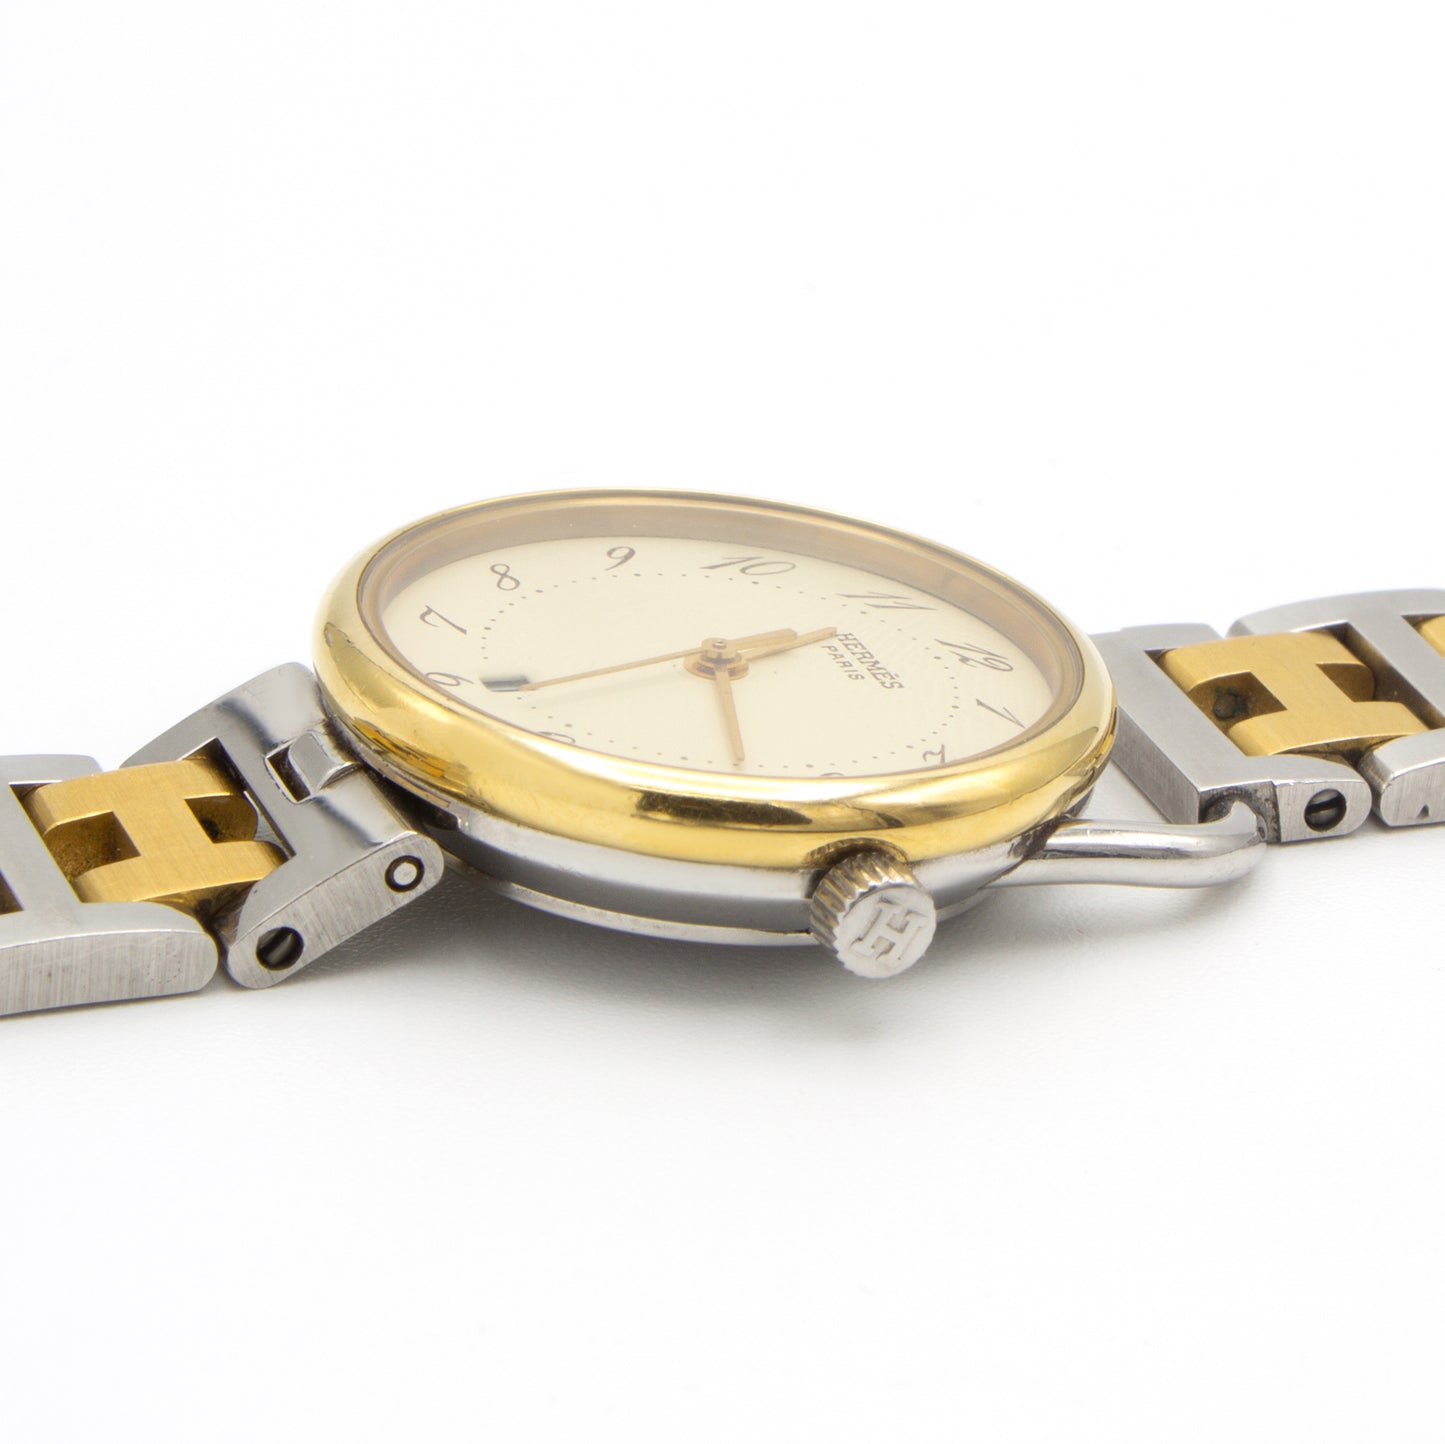 Hermes Arceau lady's watch 25mm w/ calendar